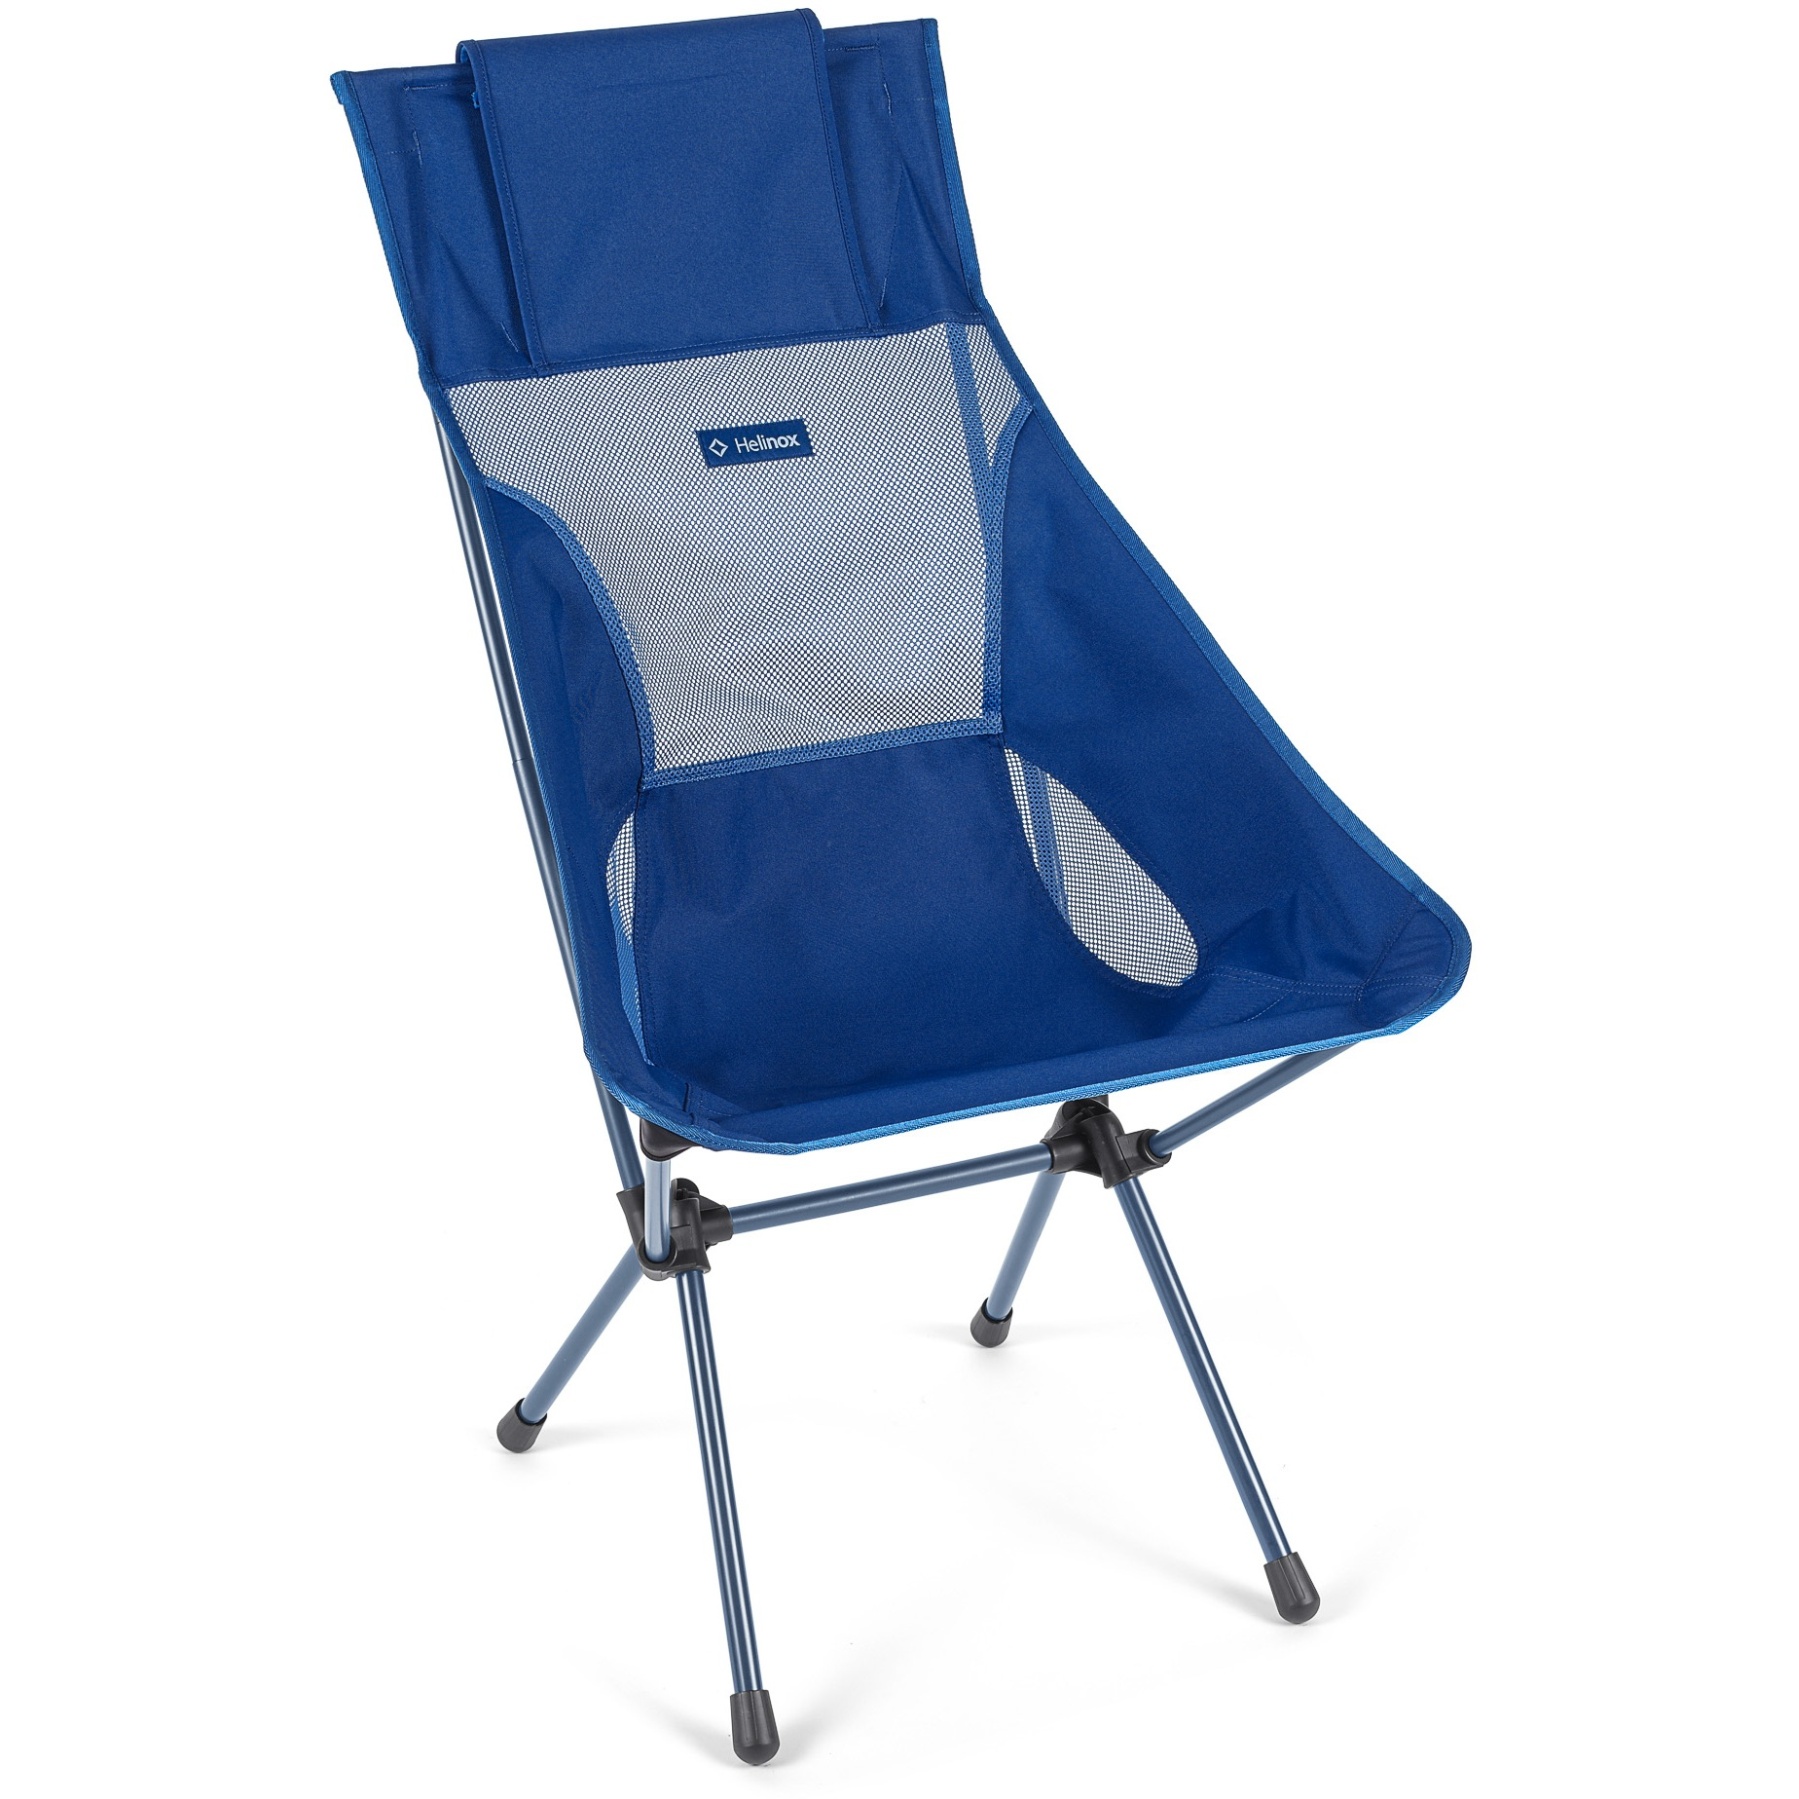 Produktbild von Helinox Sunset Chair - Campingstuhl - blue block / navy